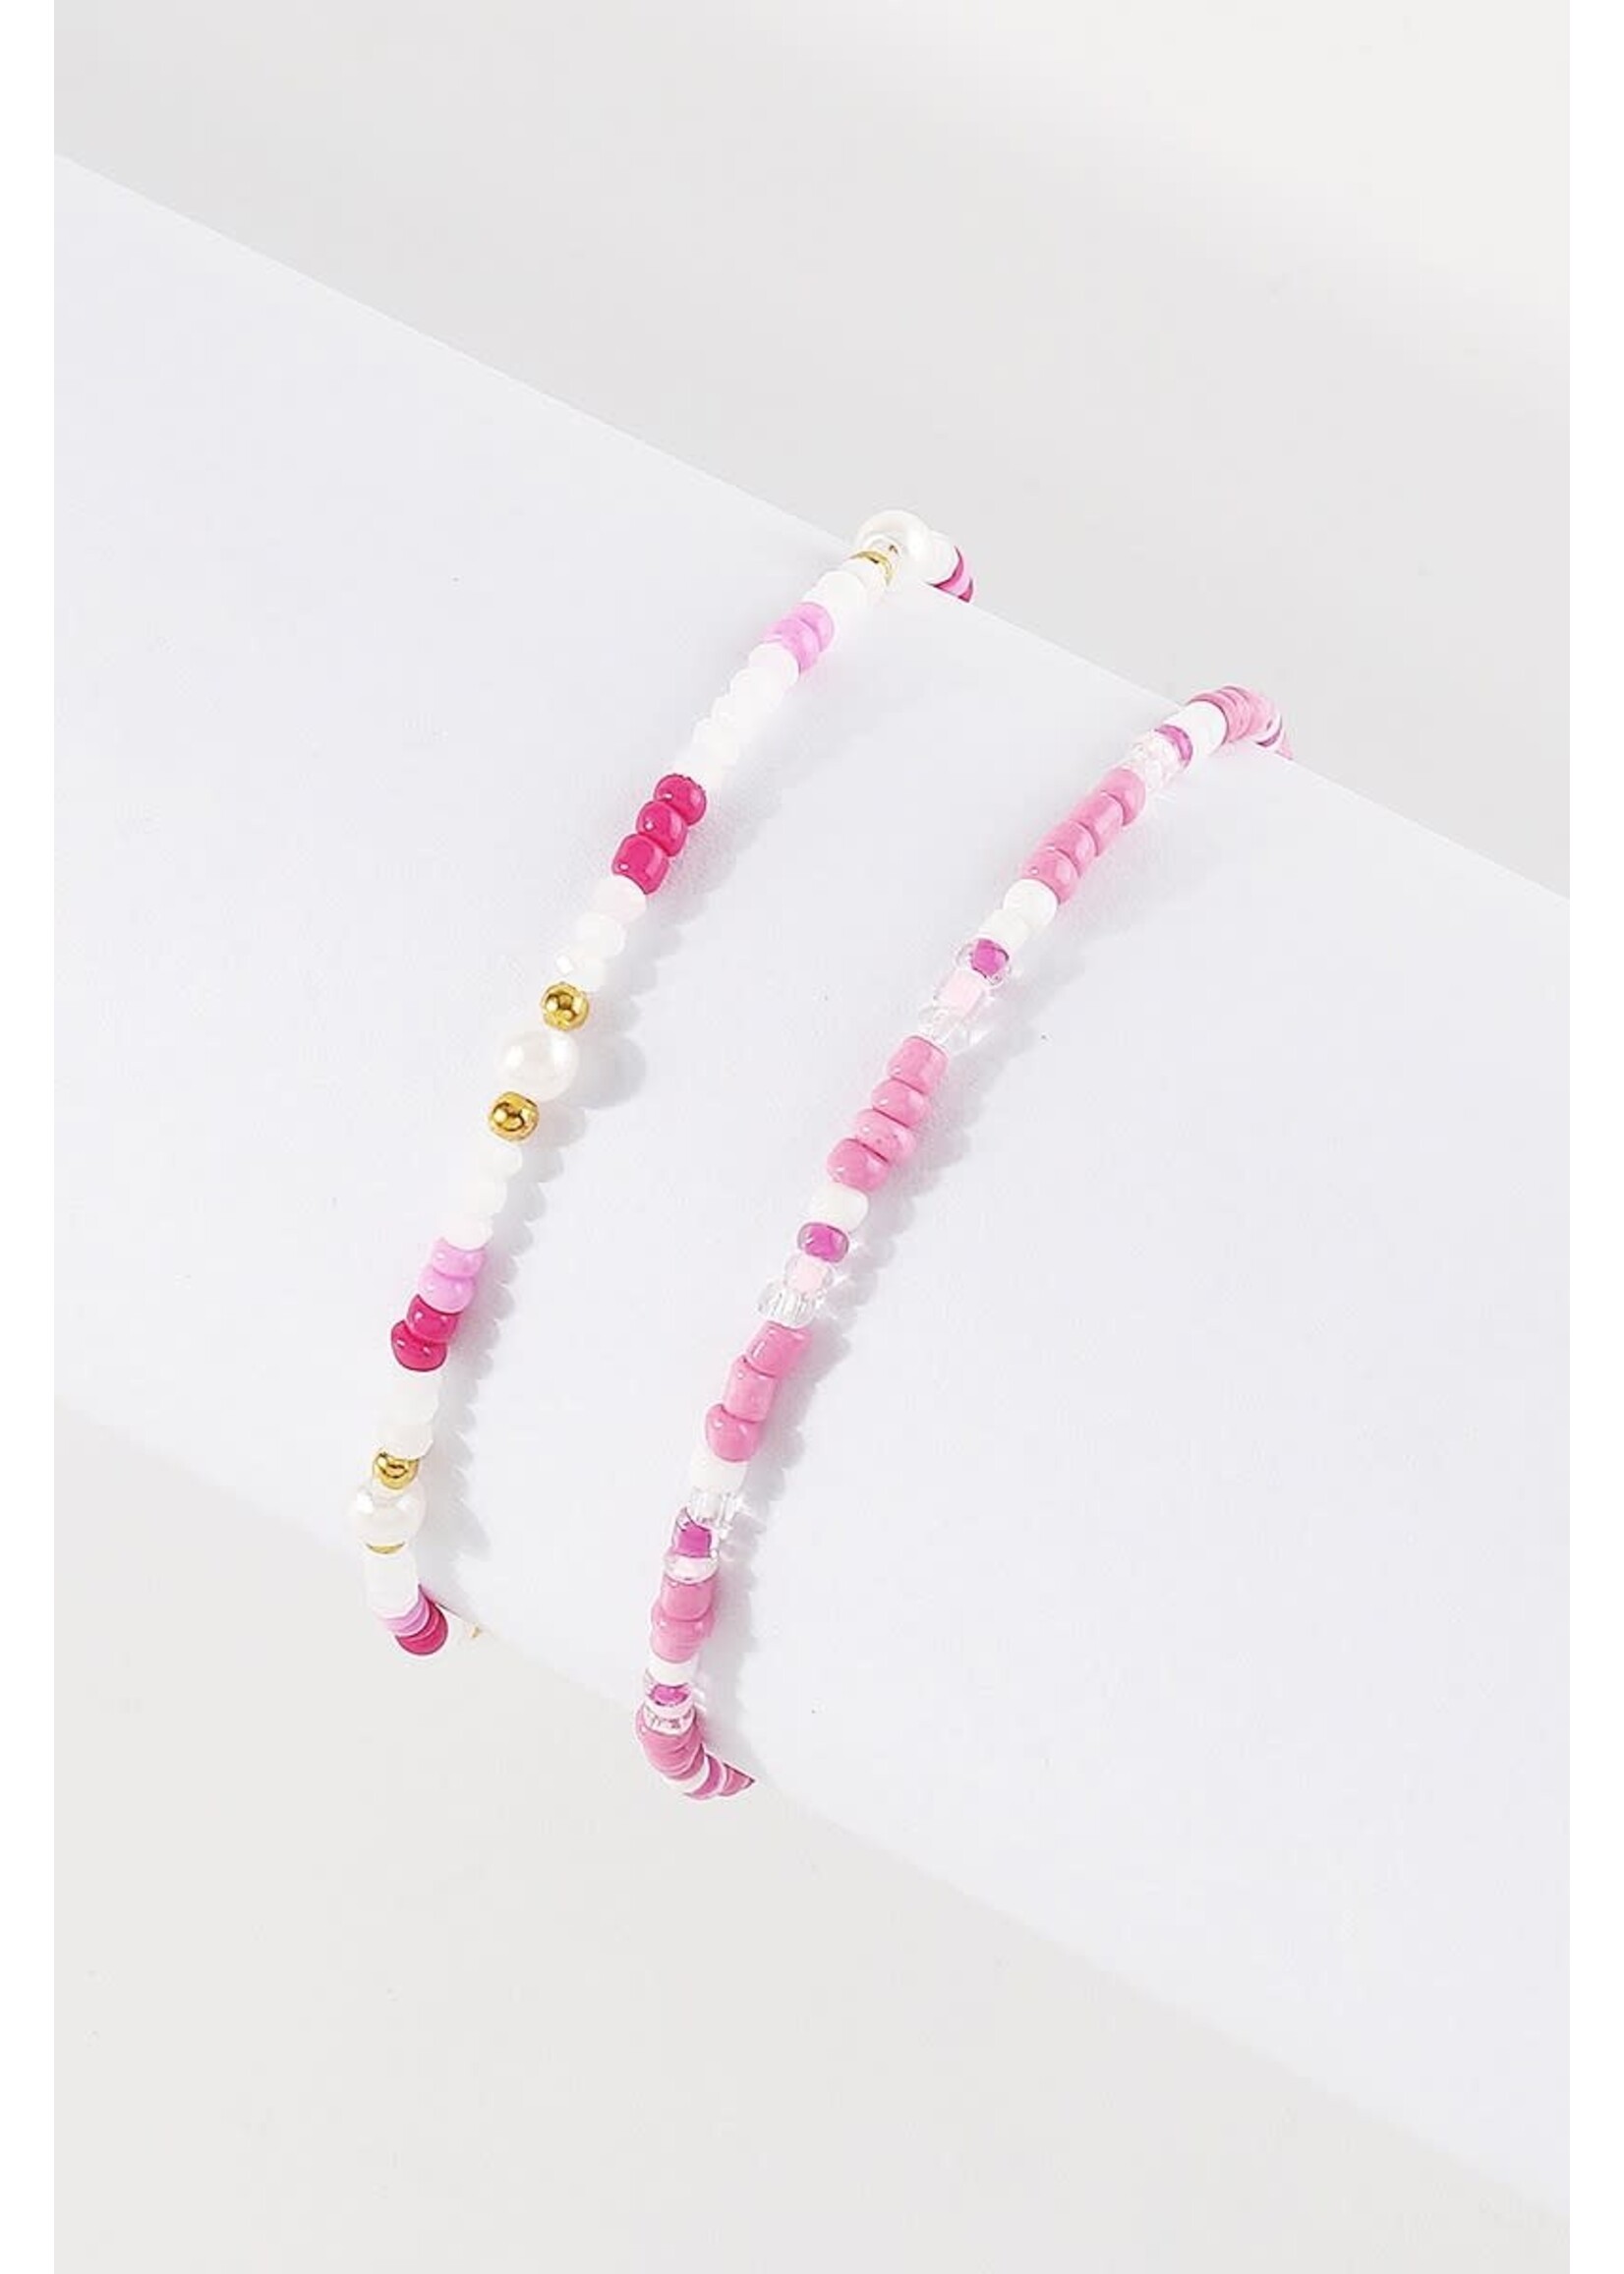 Mermaid Beads Stretch Bracelets Set